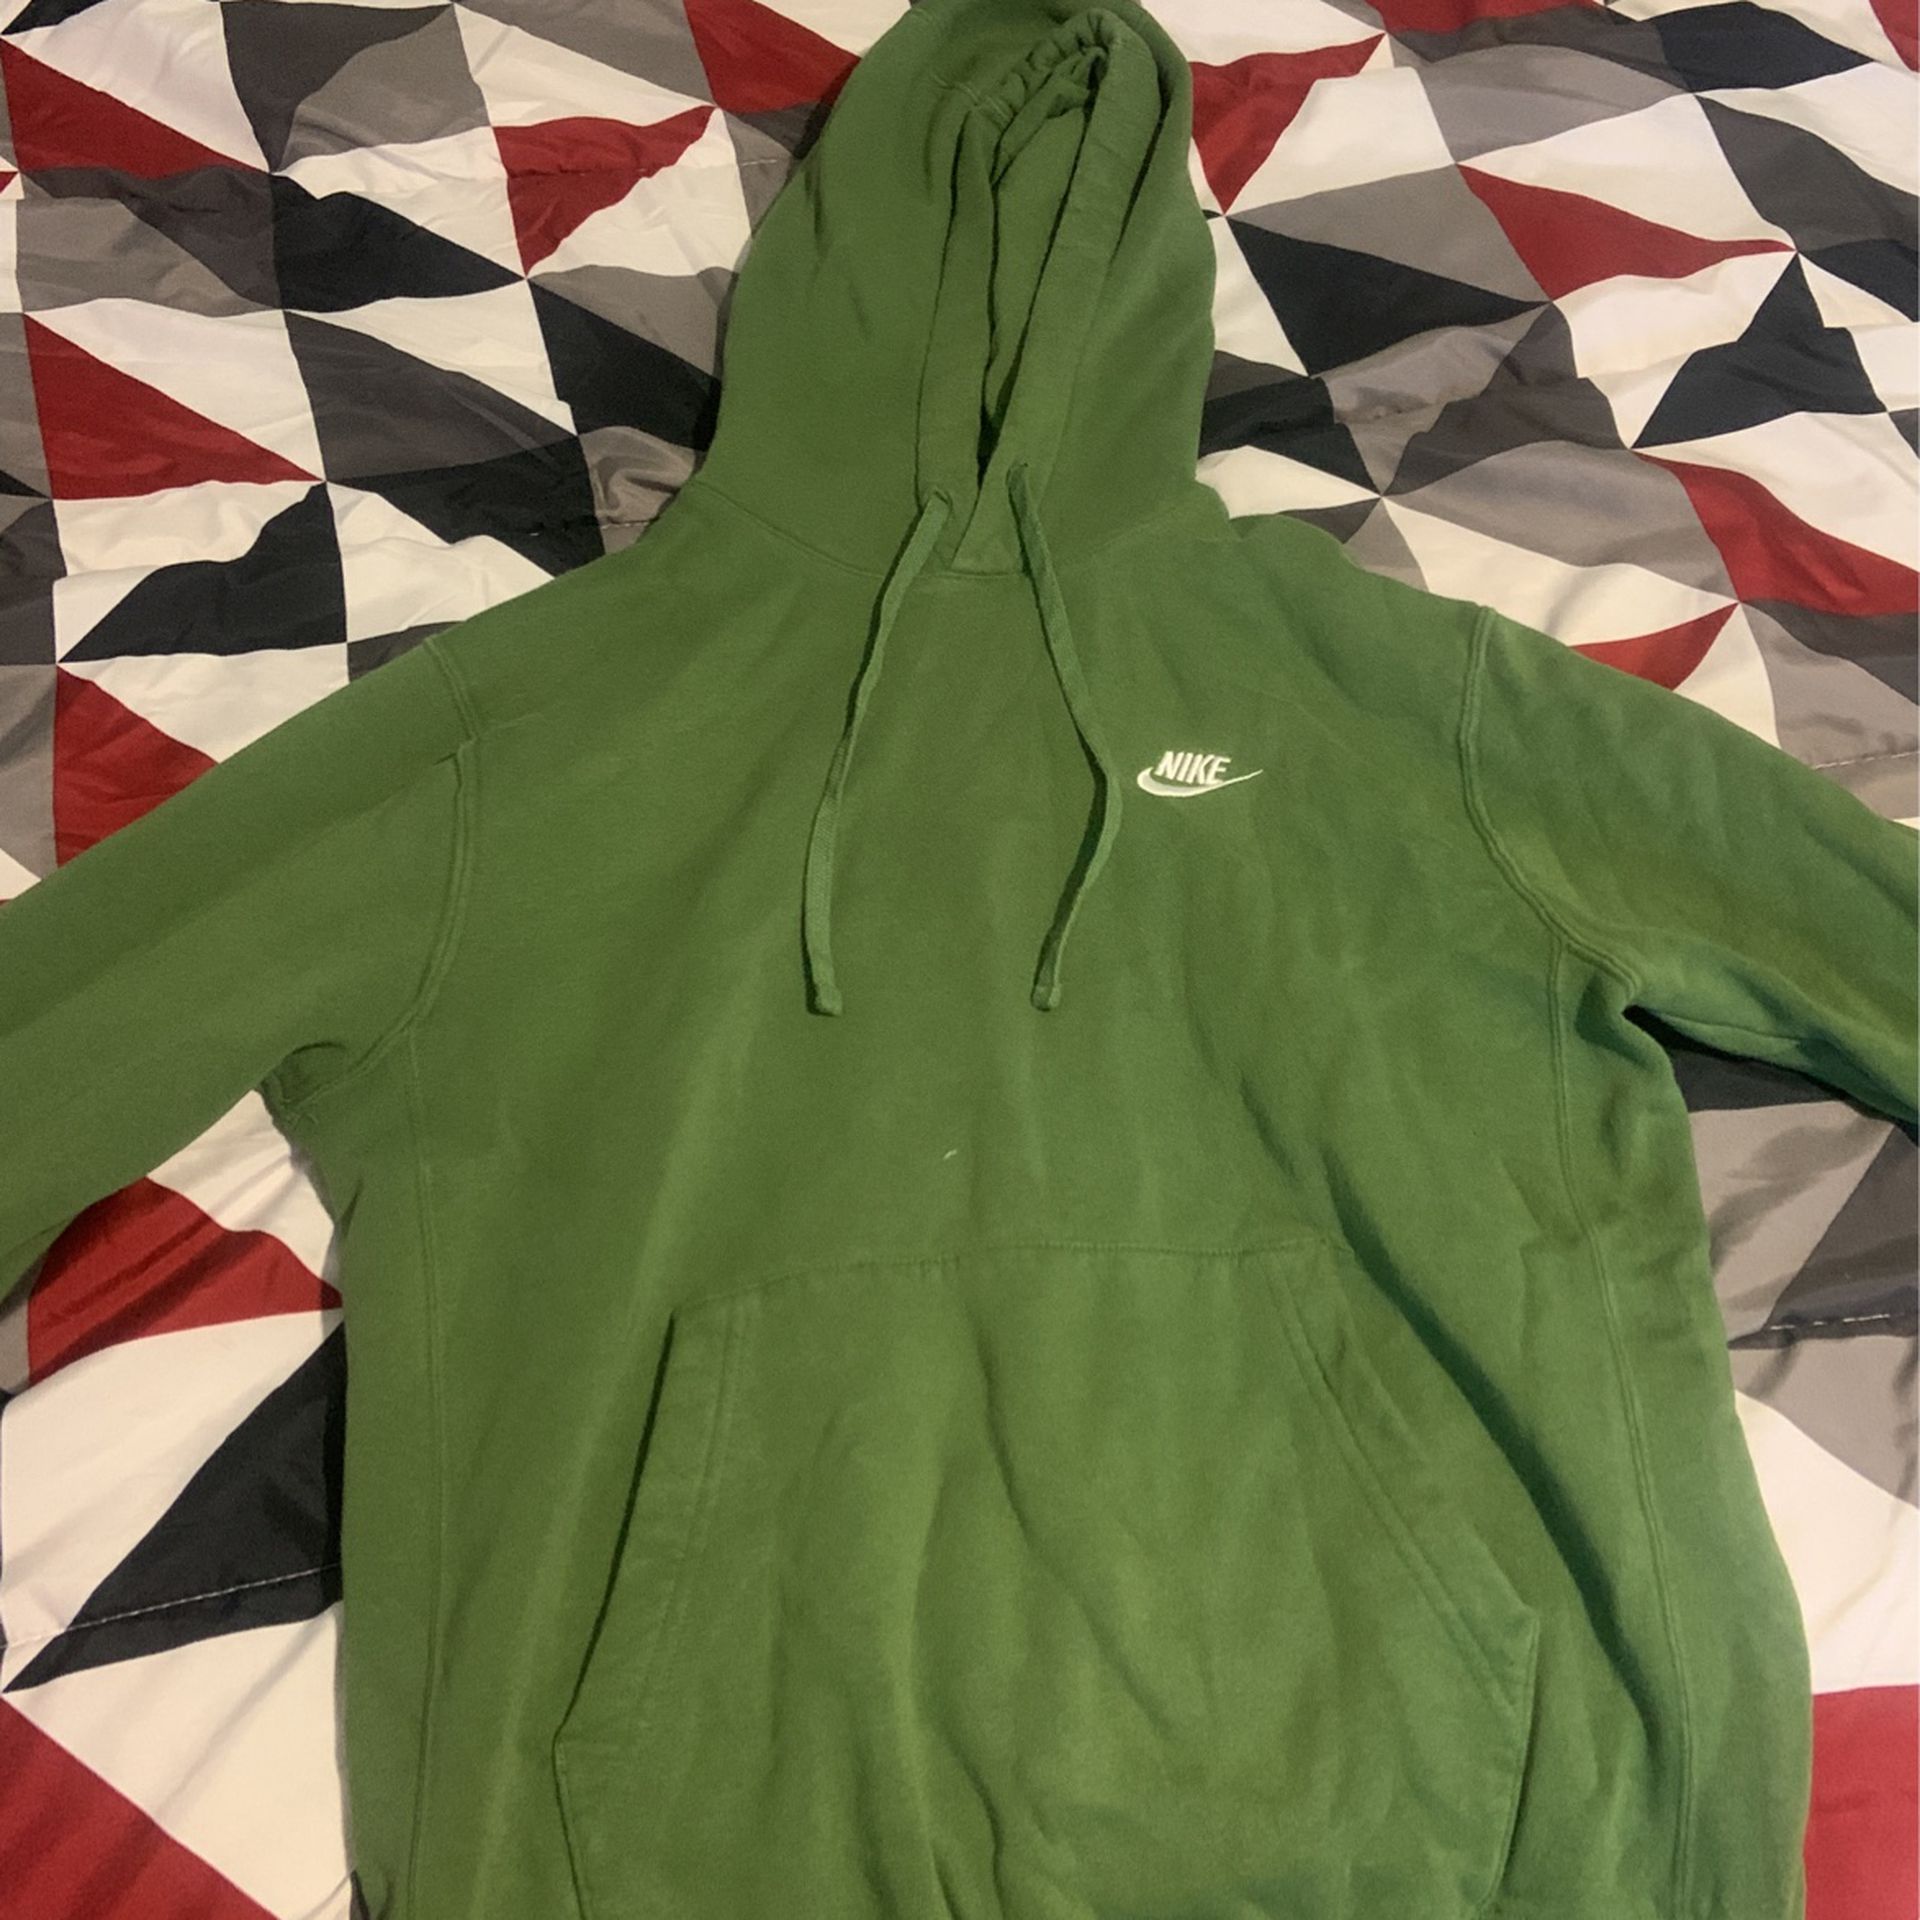 Green L Nike Jacket